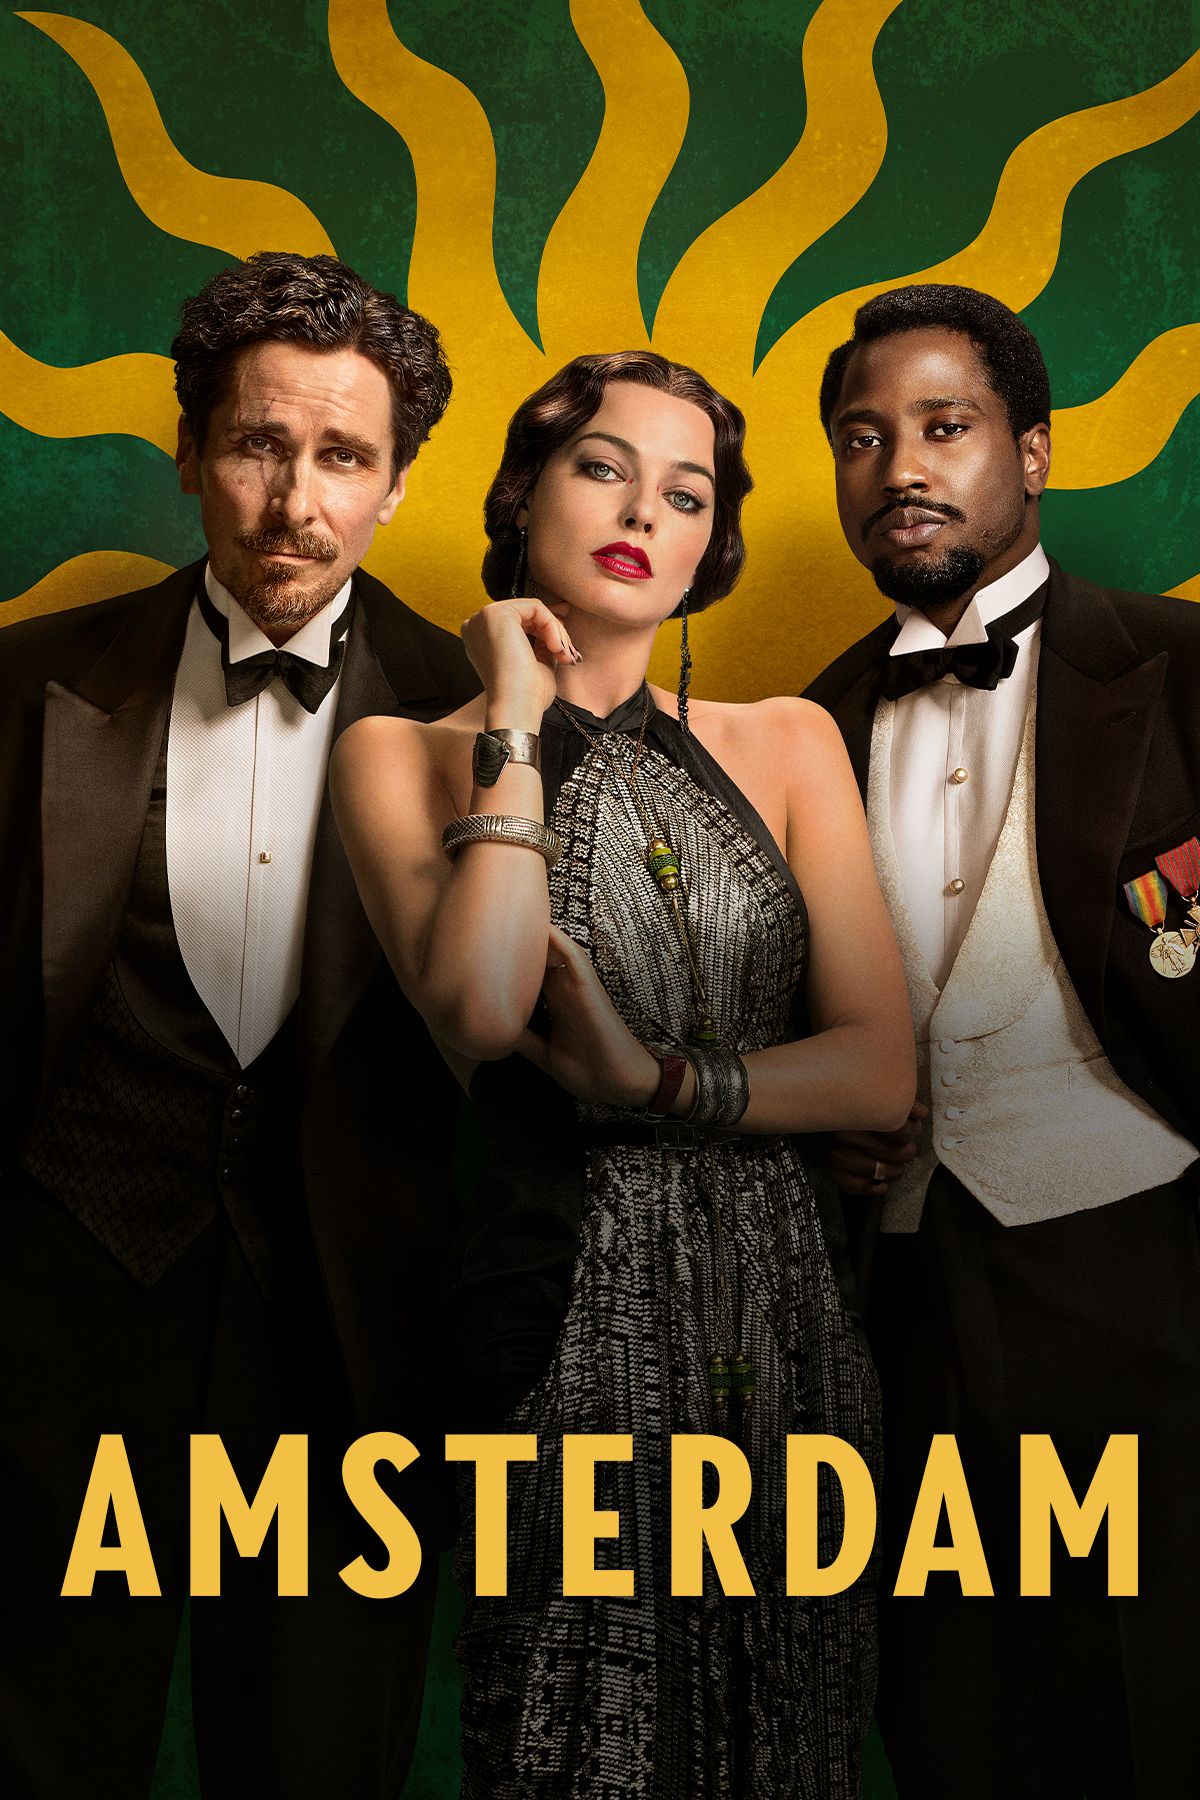 Amsterdam (2022 film) - Wikipedia